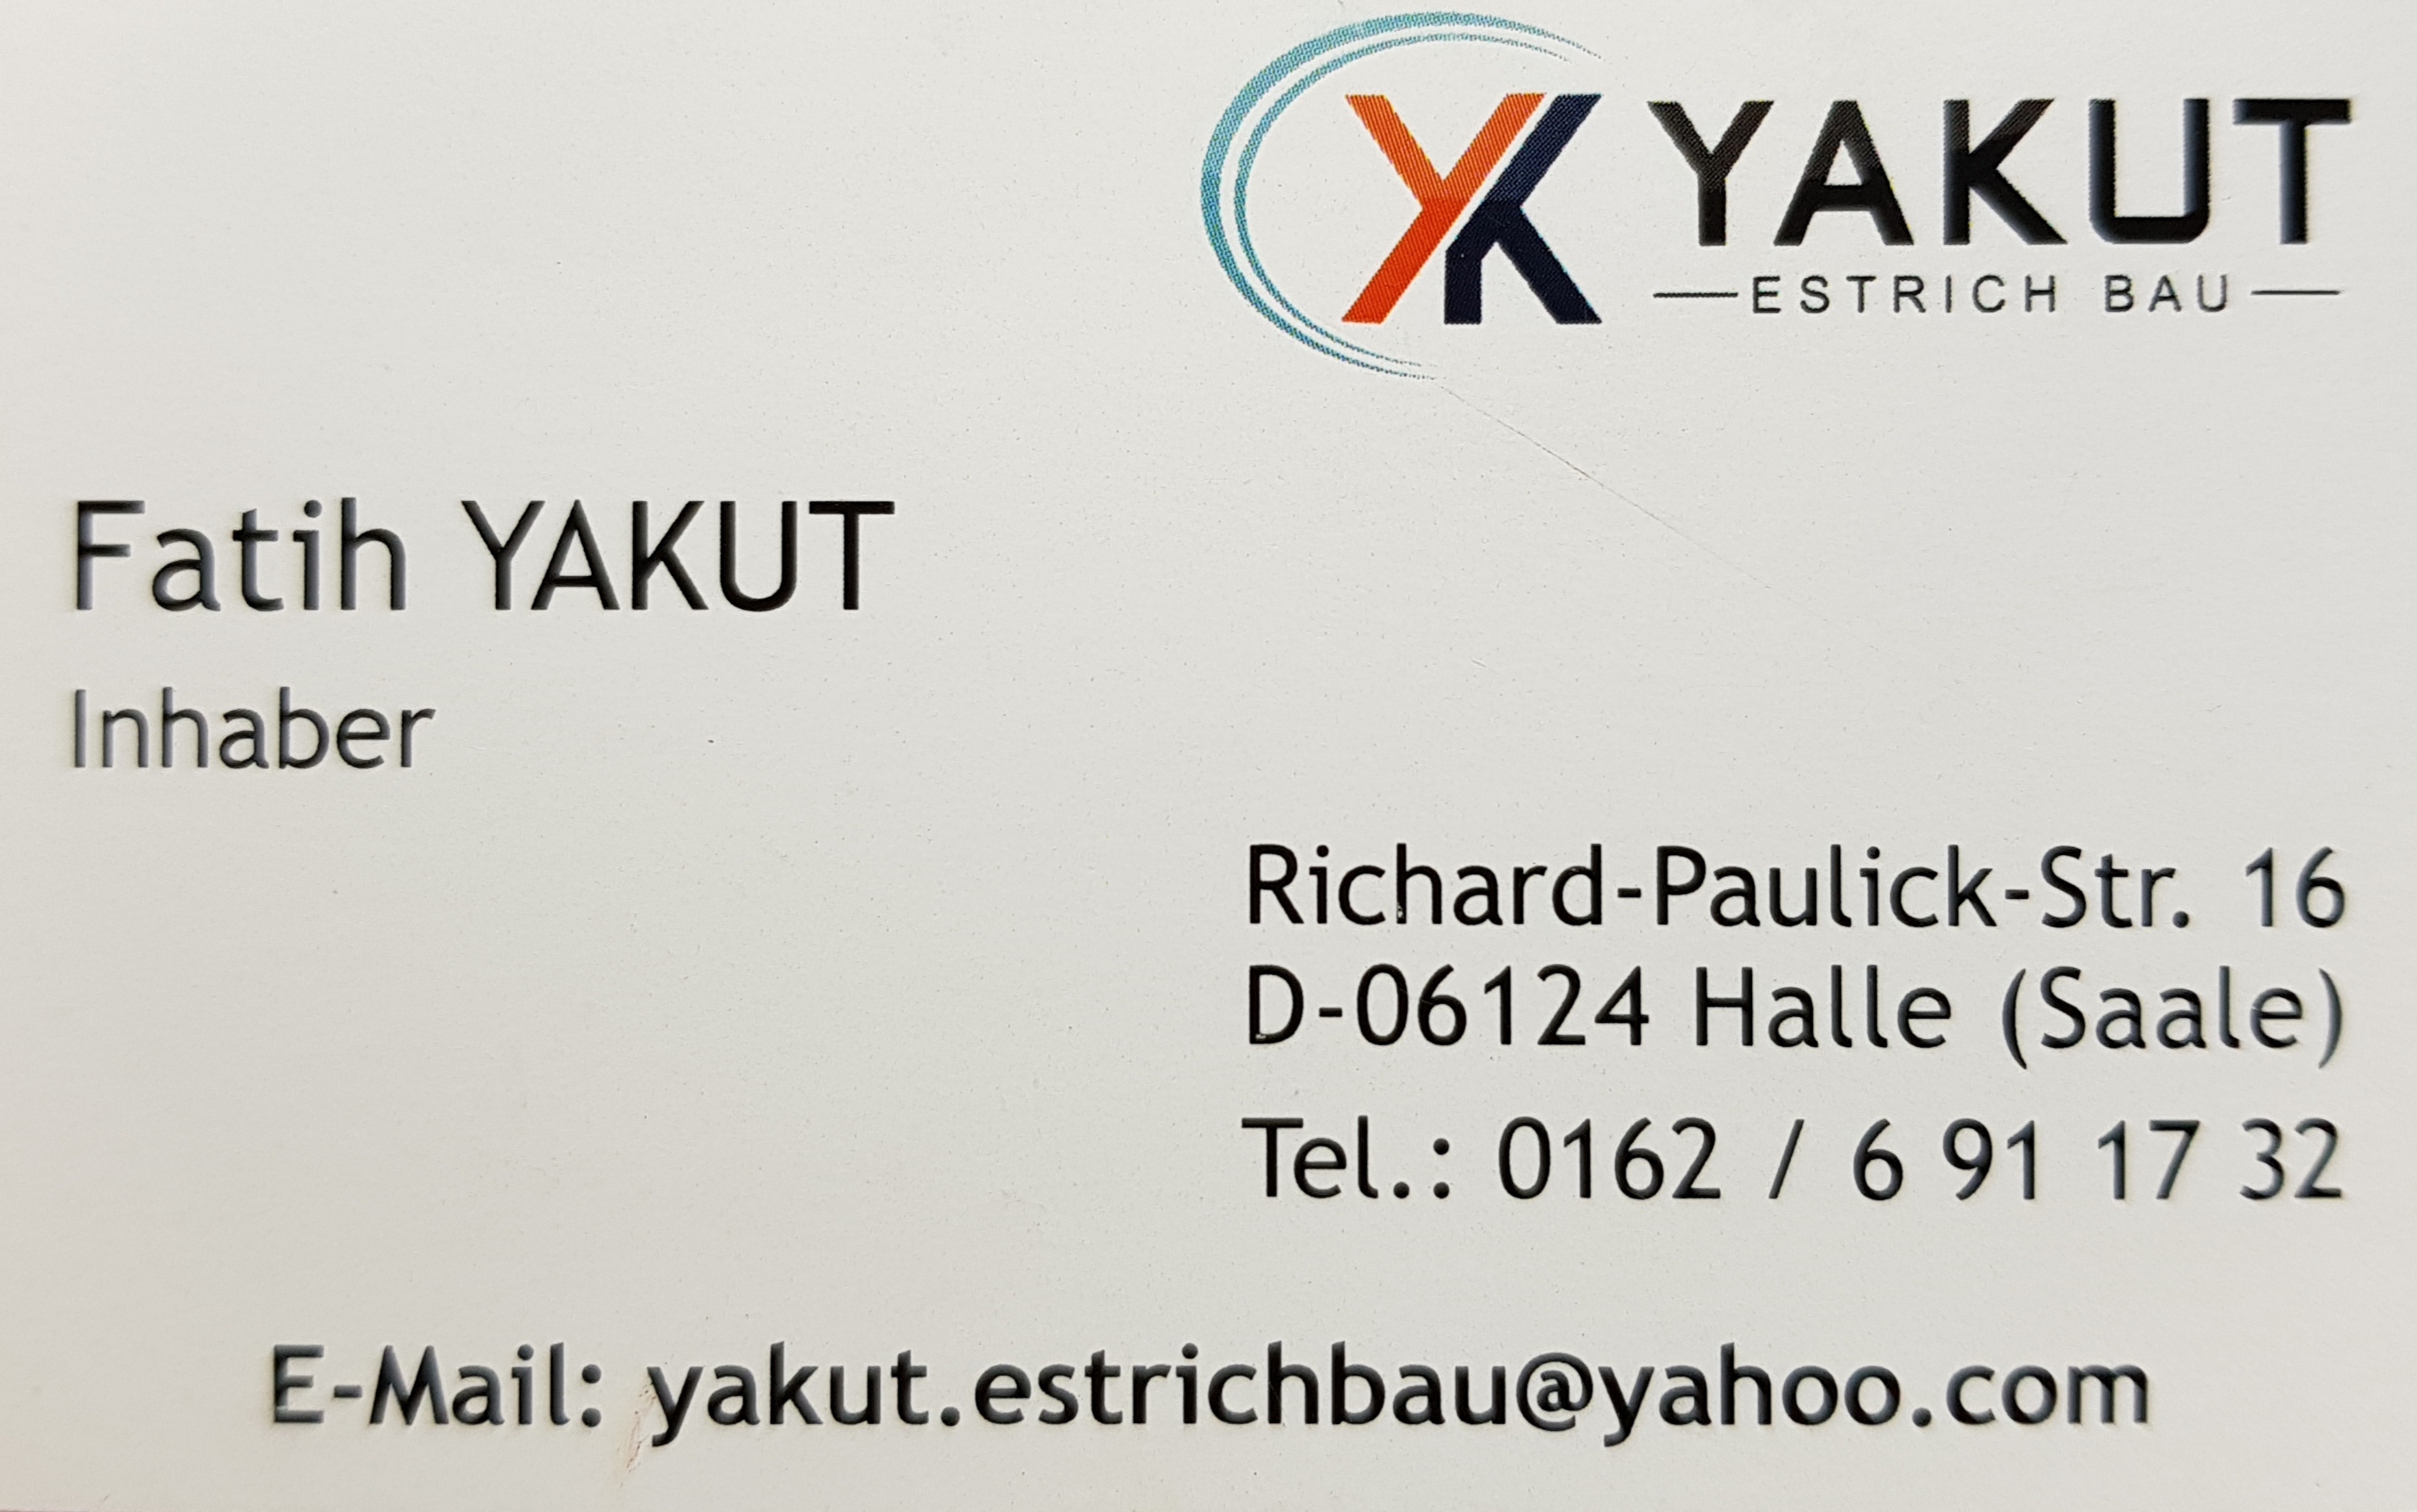 yakut.estrichbau@yahoo.com